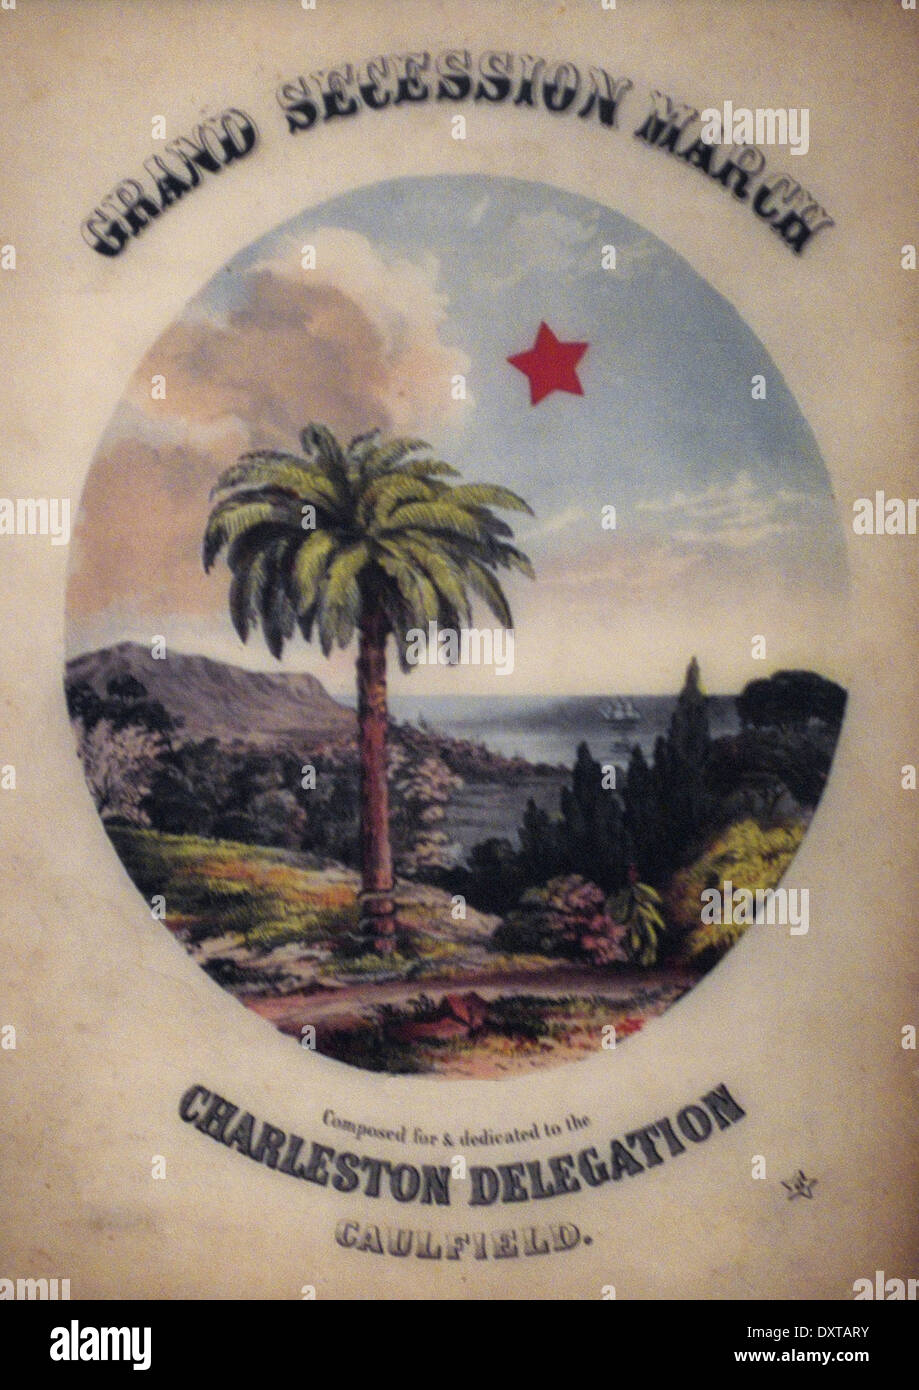 Grand Secession March - Composed and Dedicated to the Charleston Delegation 1860 Secession Convention delegates Stock Photo